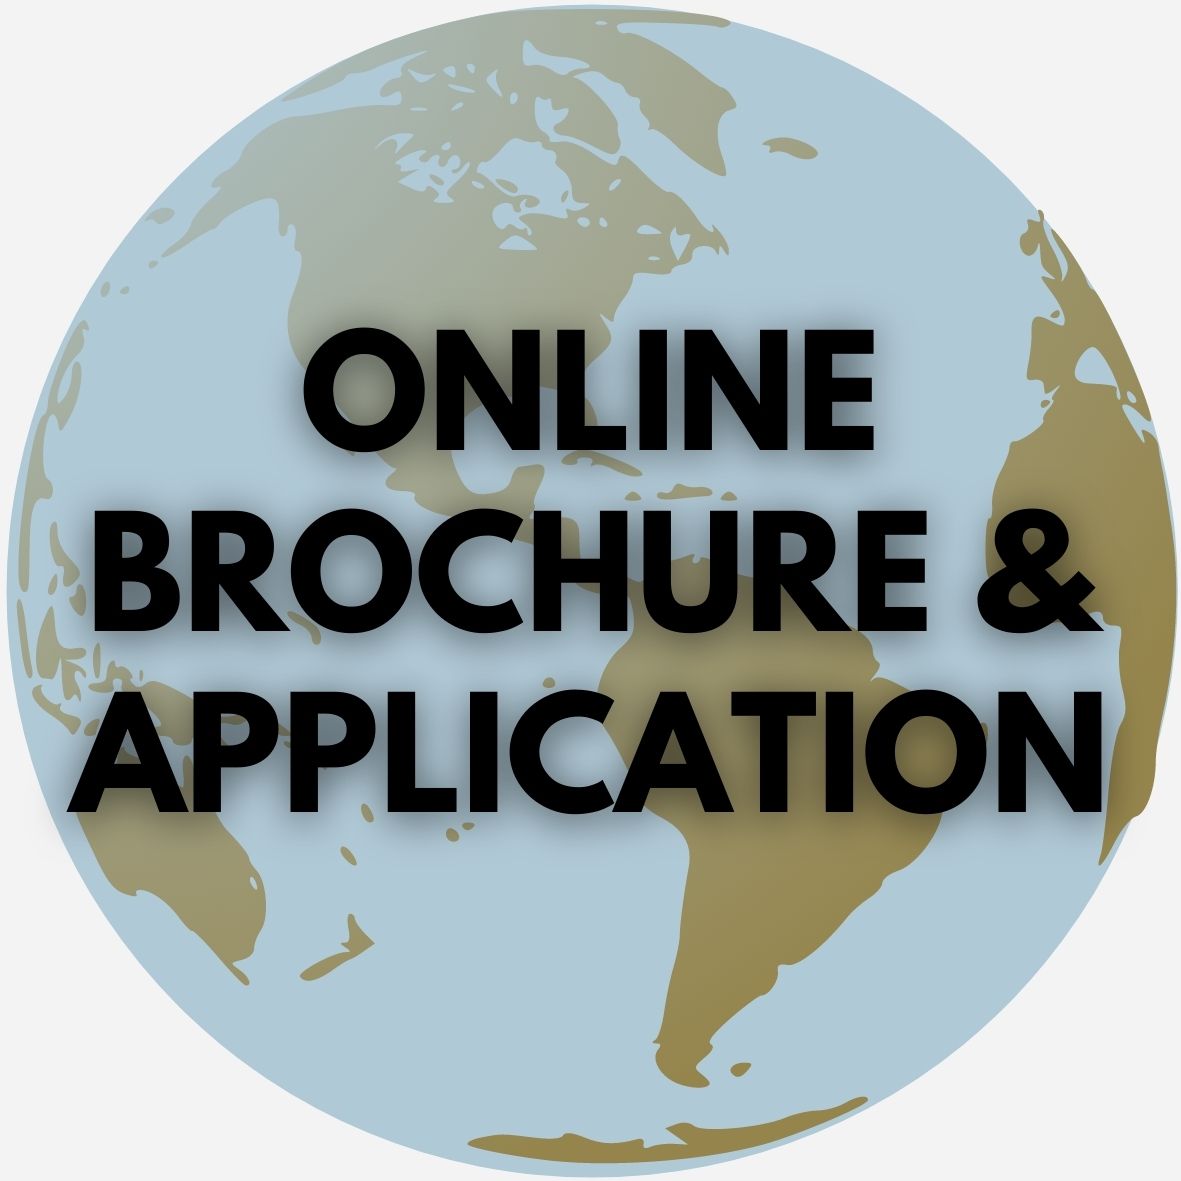 Online brochure & application button